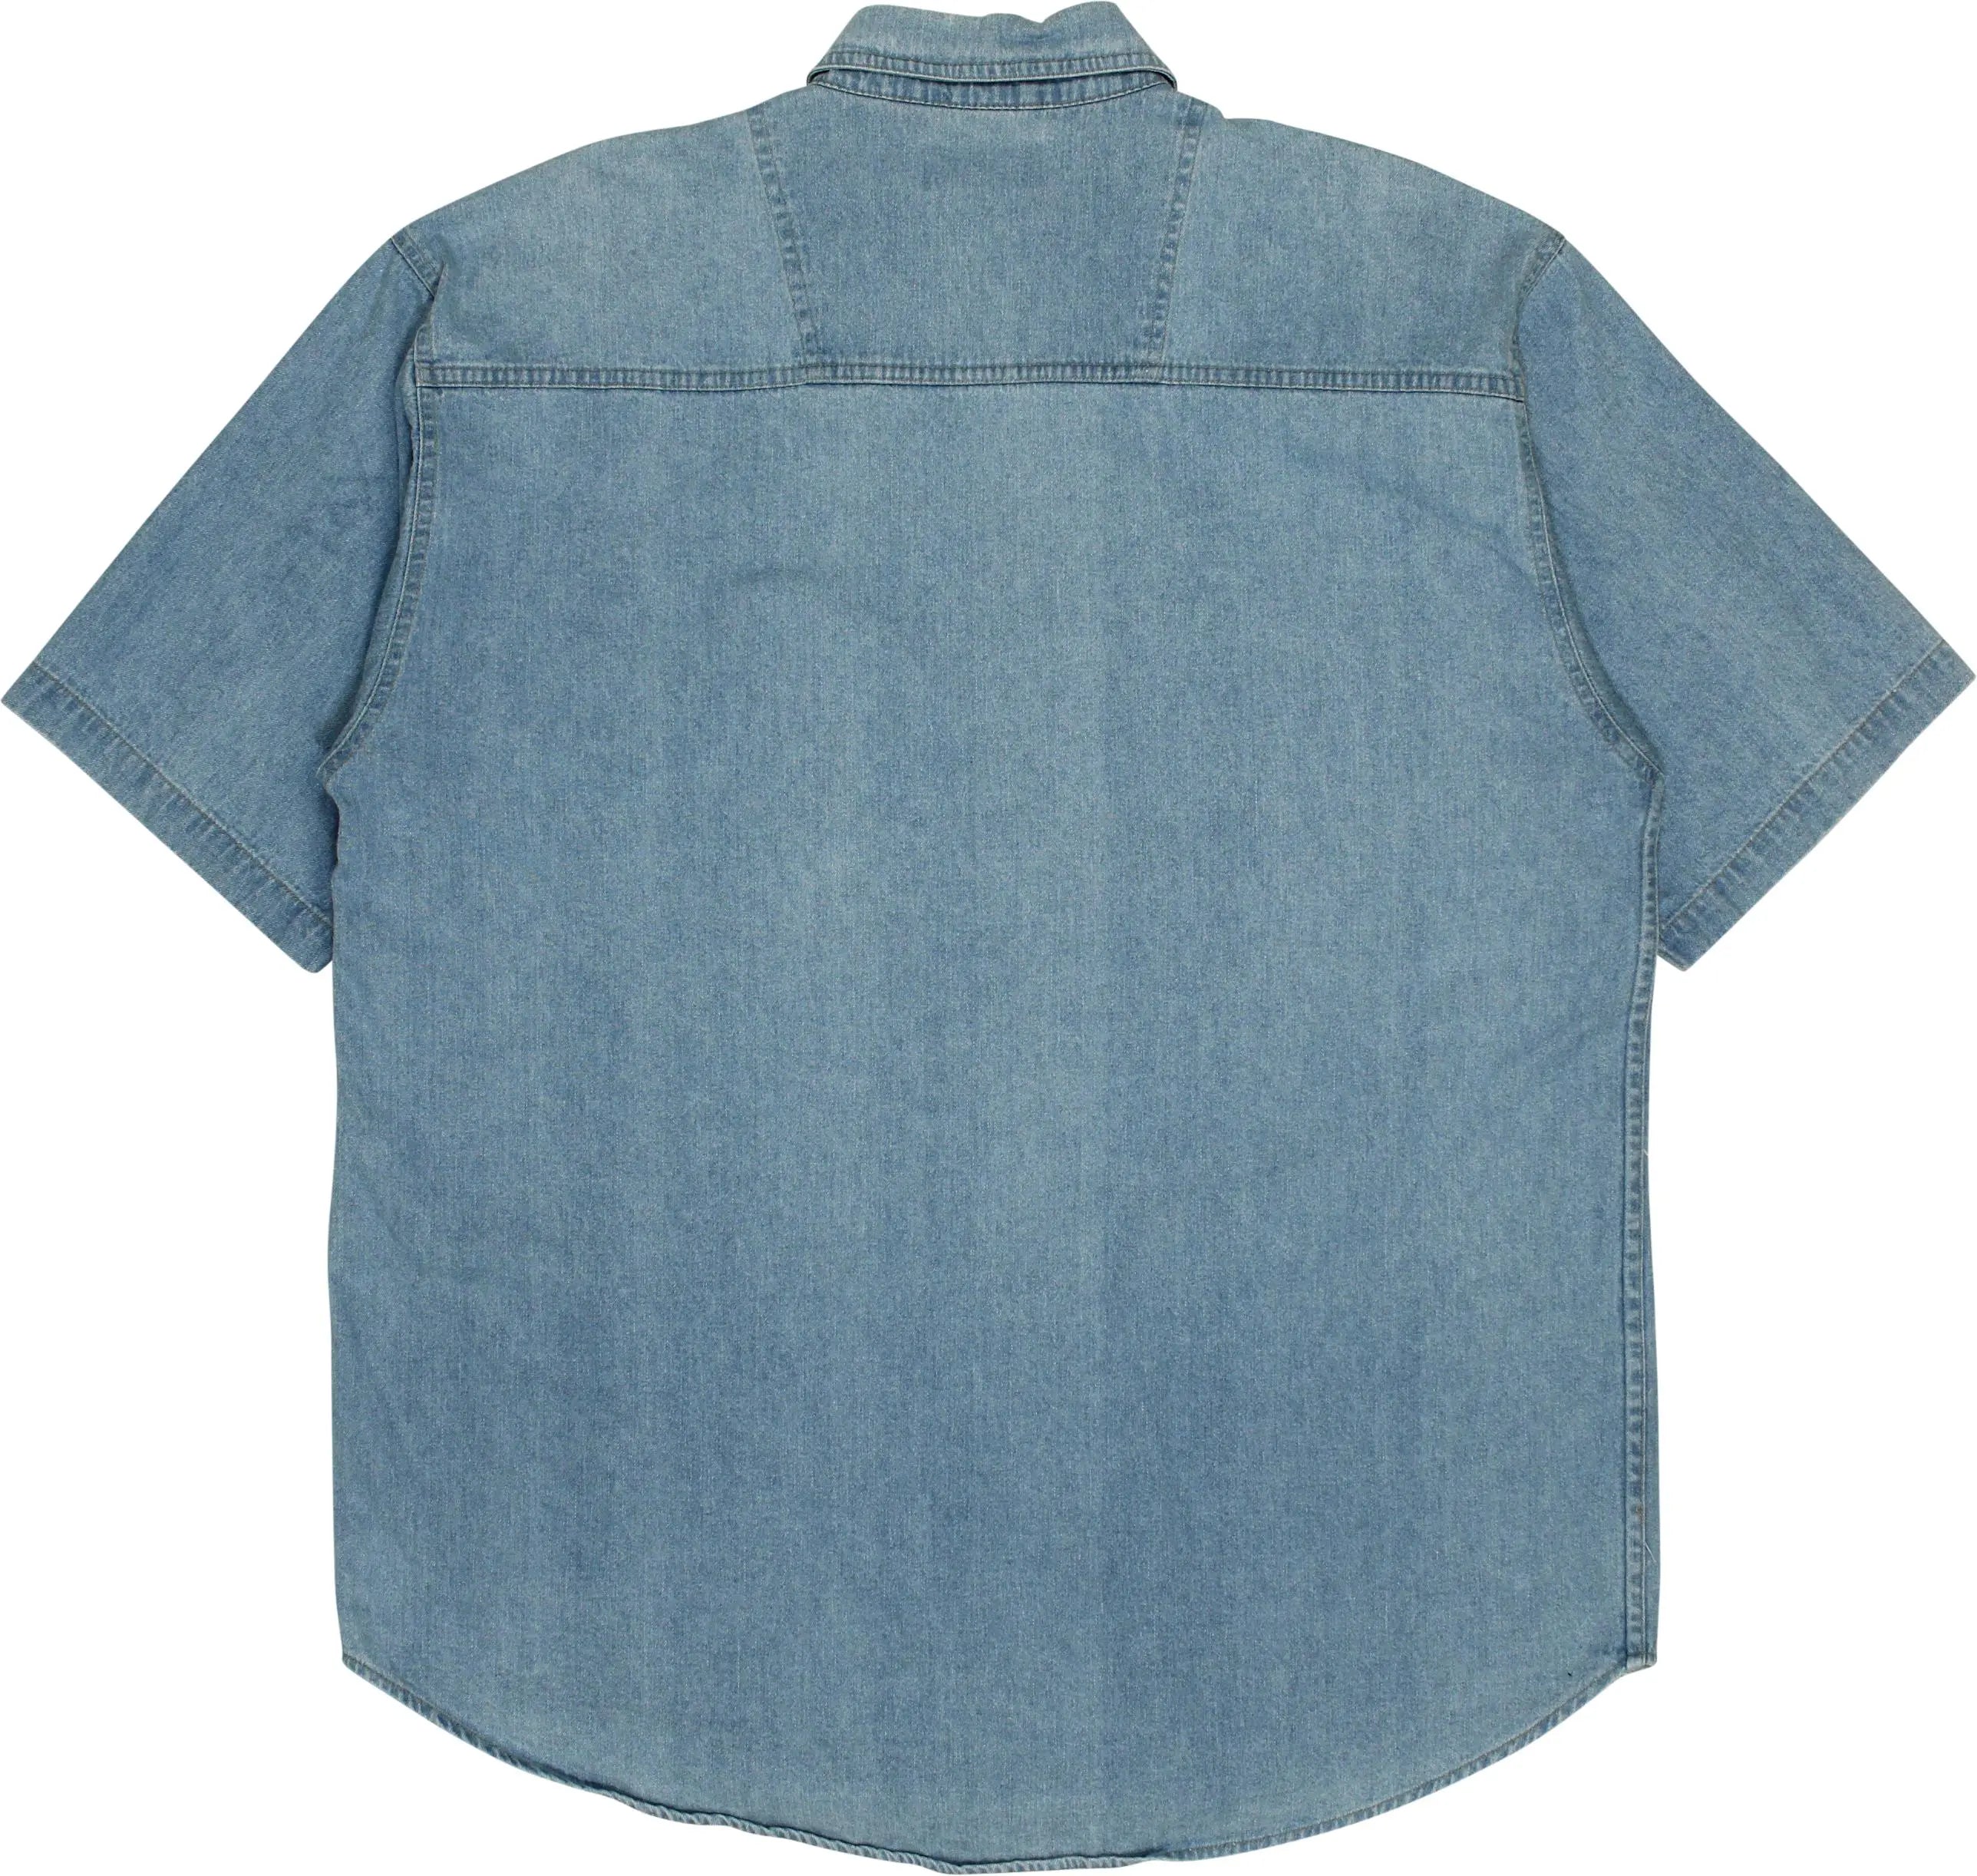 Click Corner - 90s Denim Short Sleeve Shirt- ThriftTale.com - Vintage and second handclothing